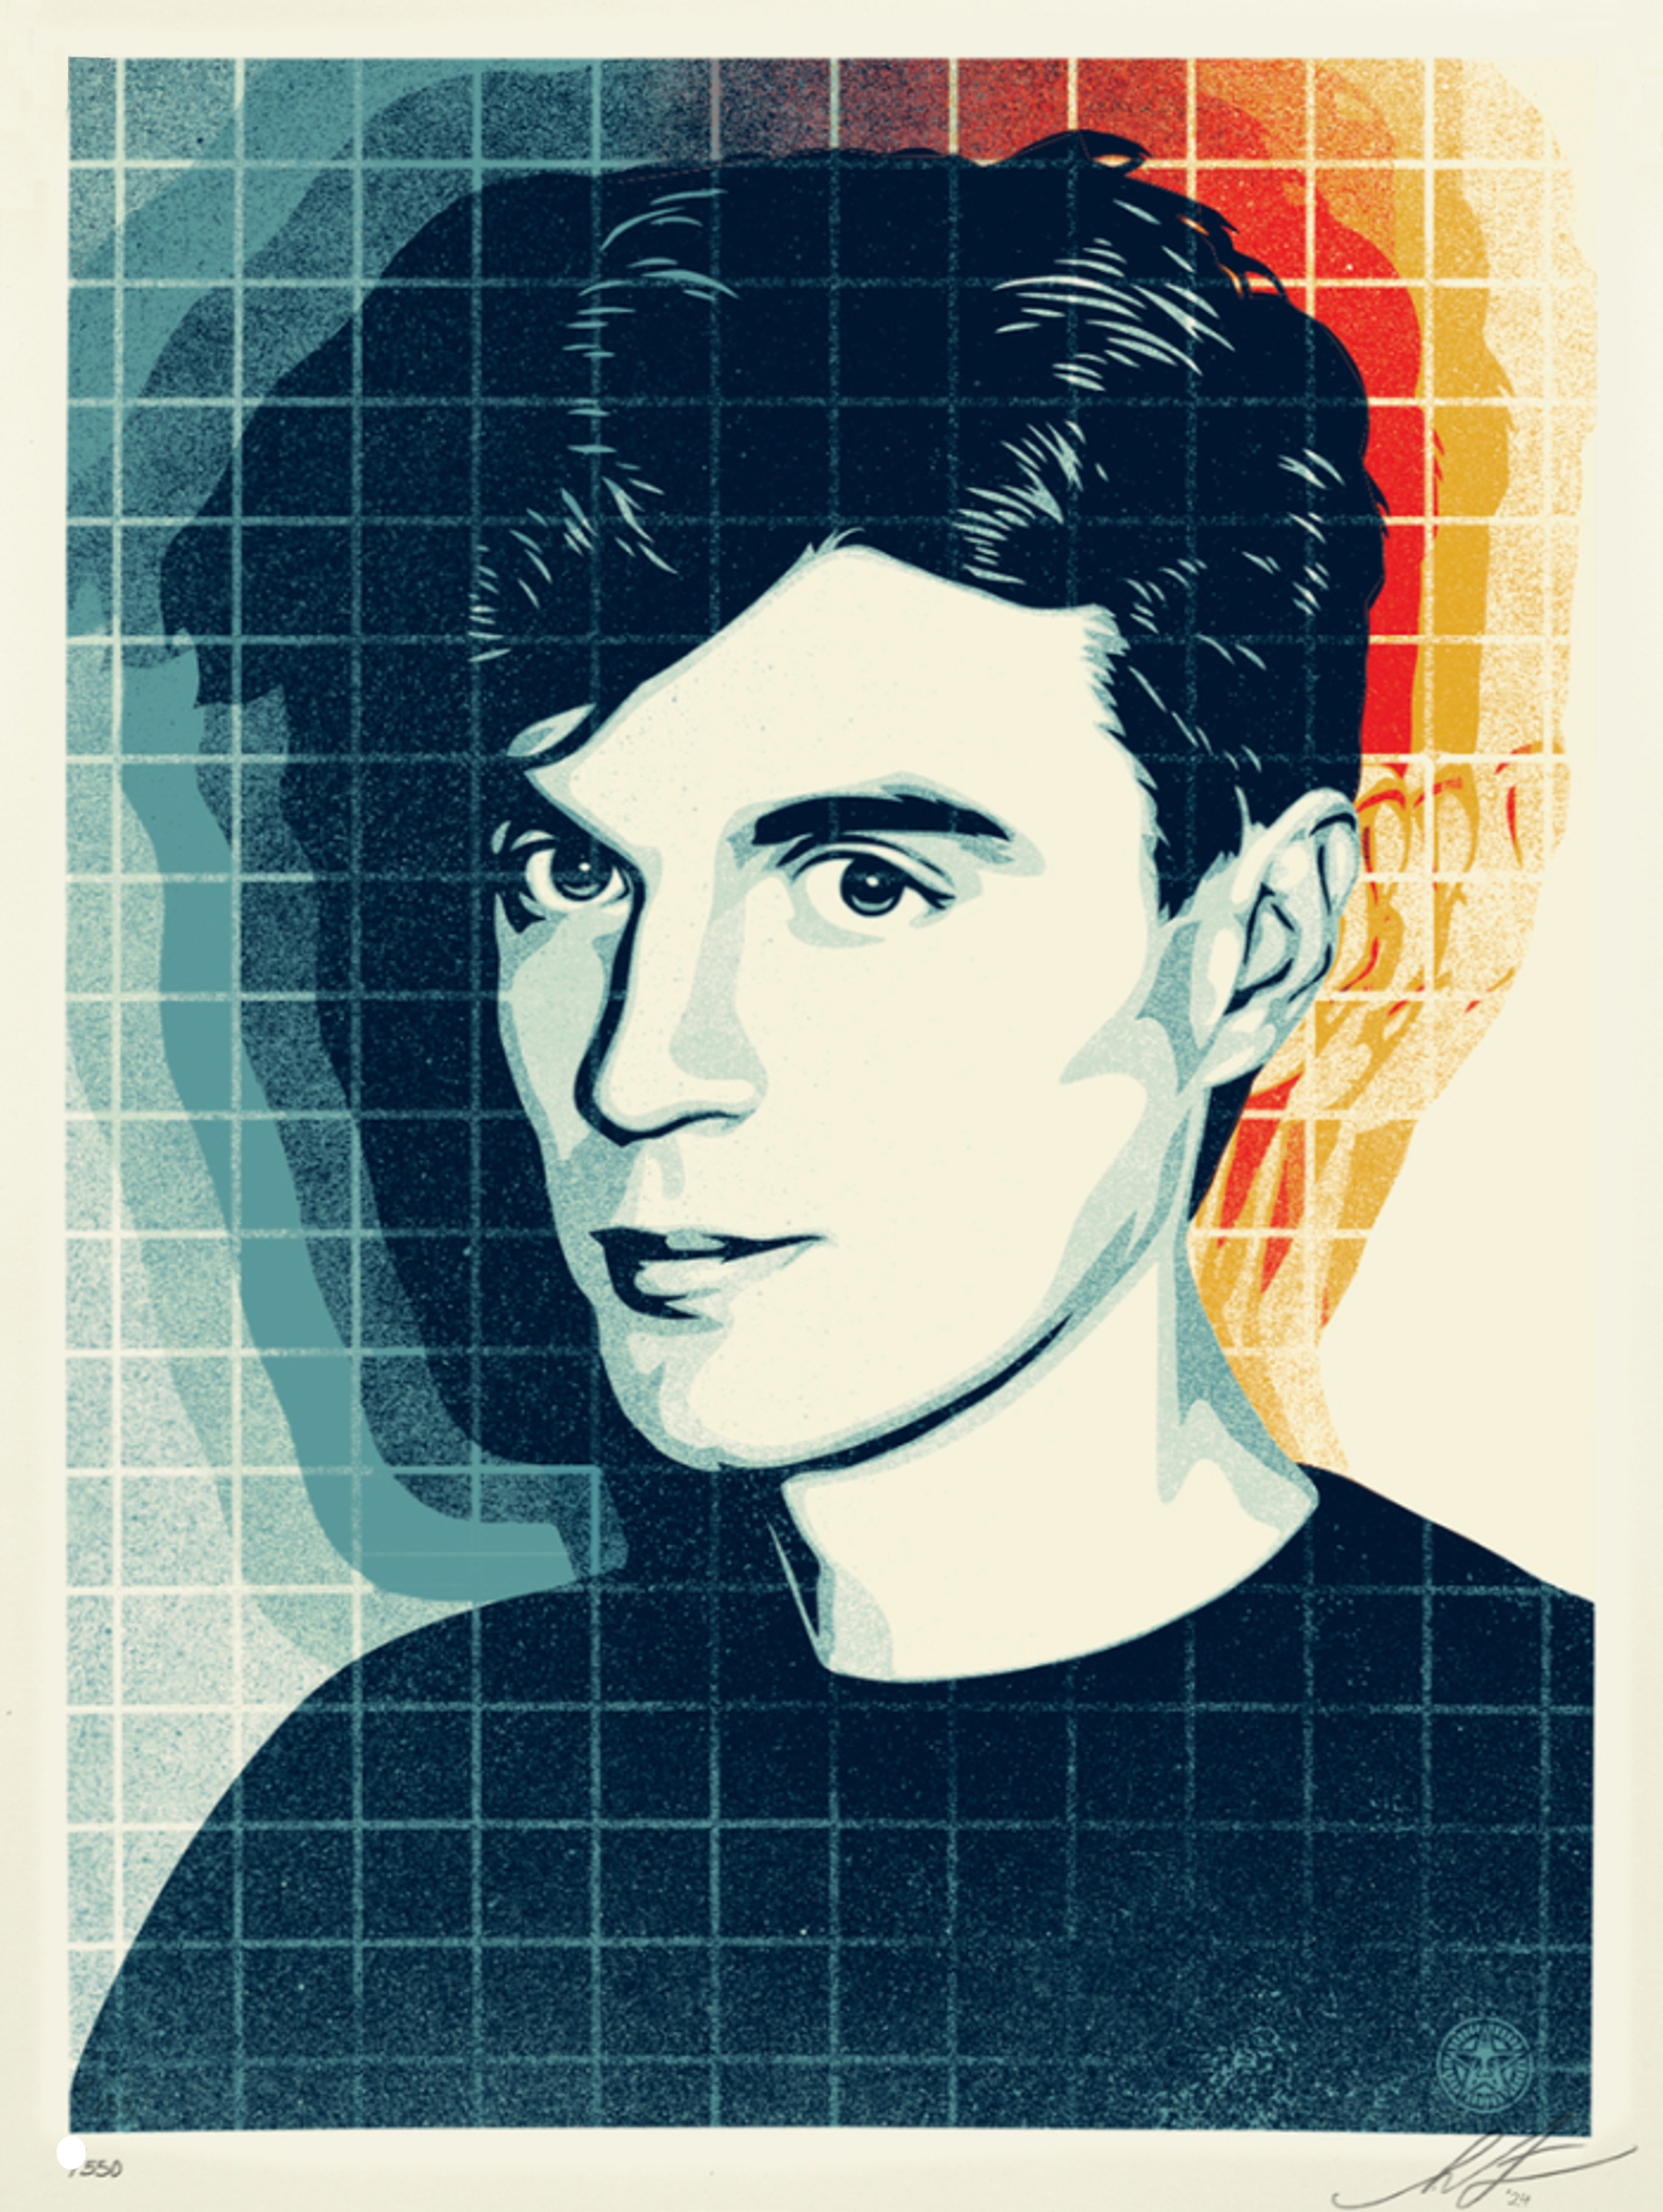 Overloading the Grid (David Byrne) (Talking Heads